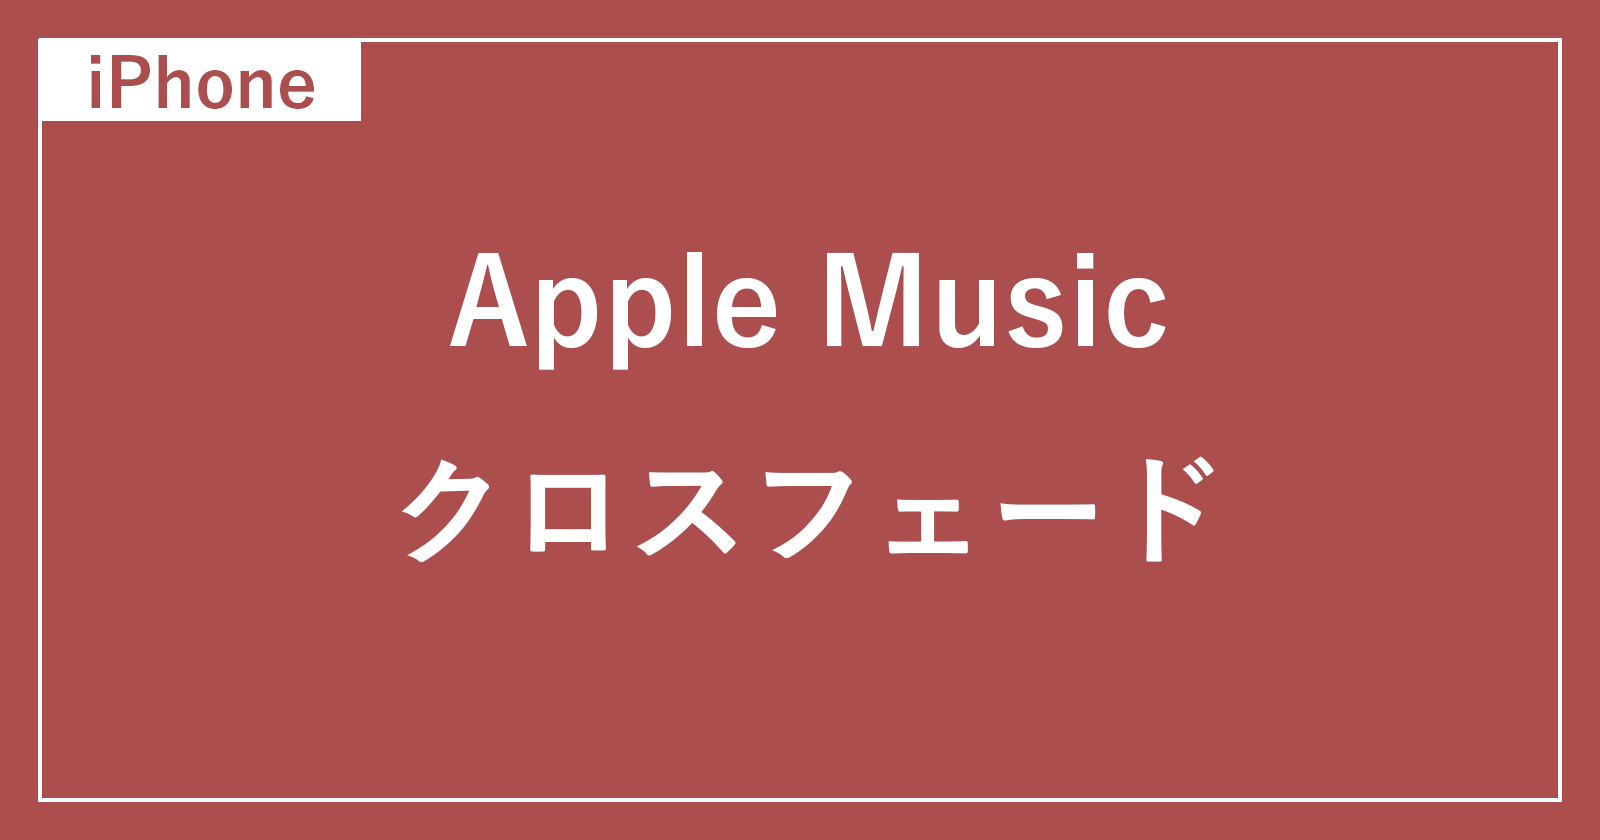 iphone apple music crossfade